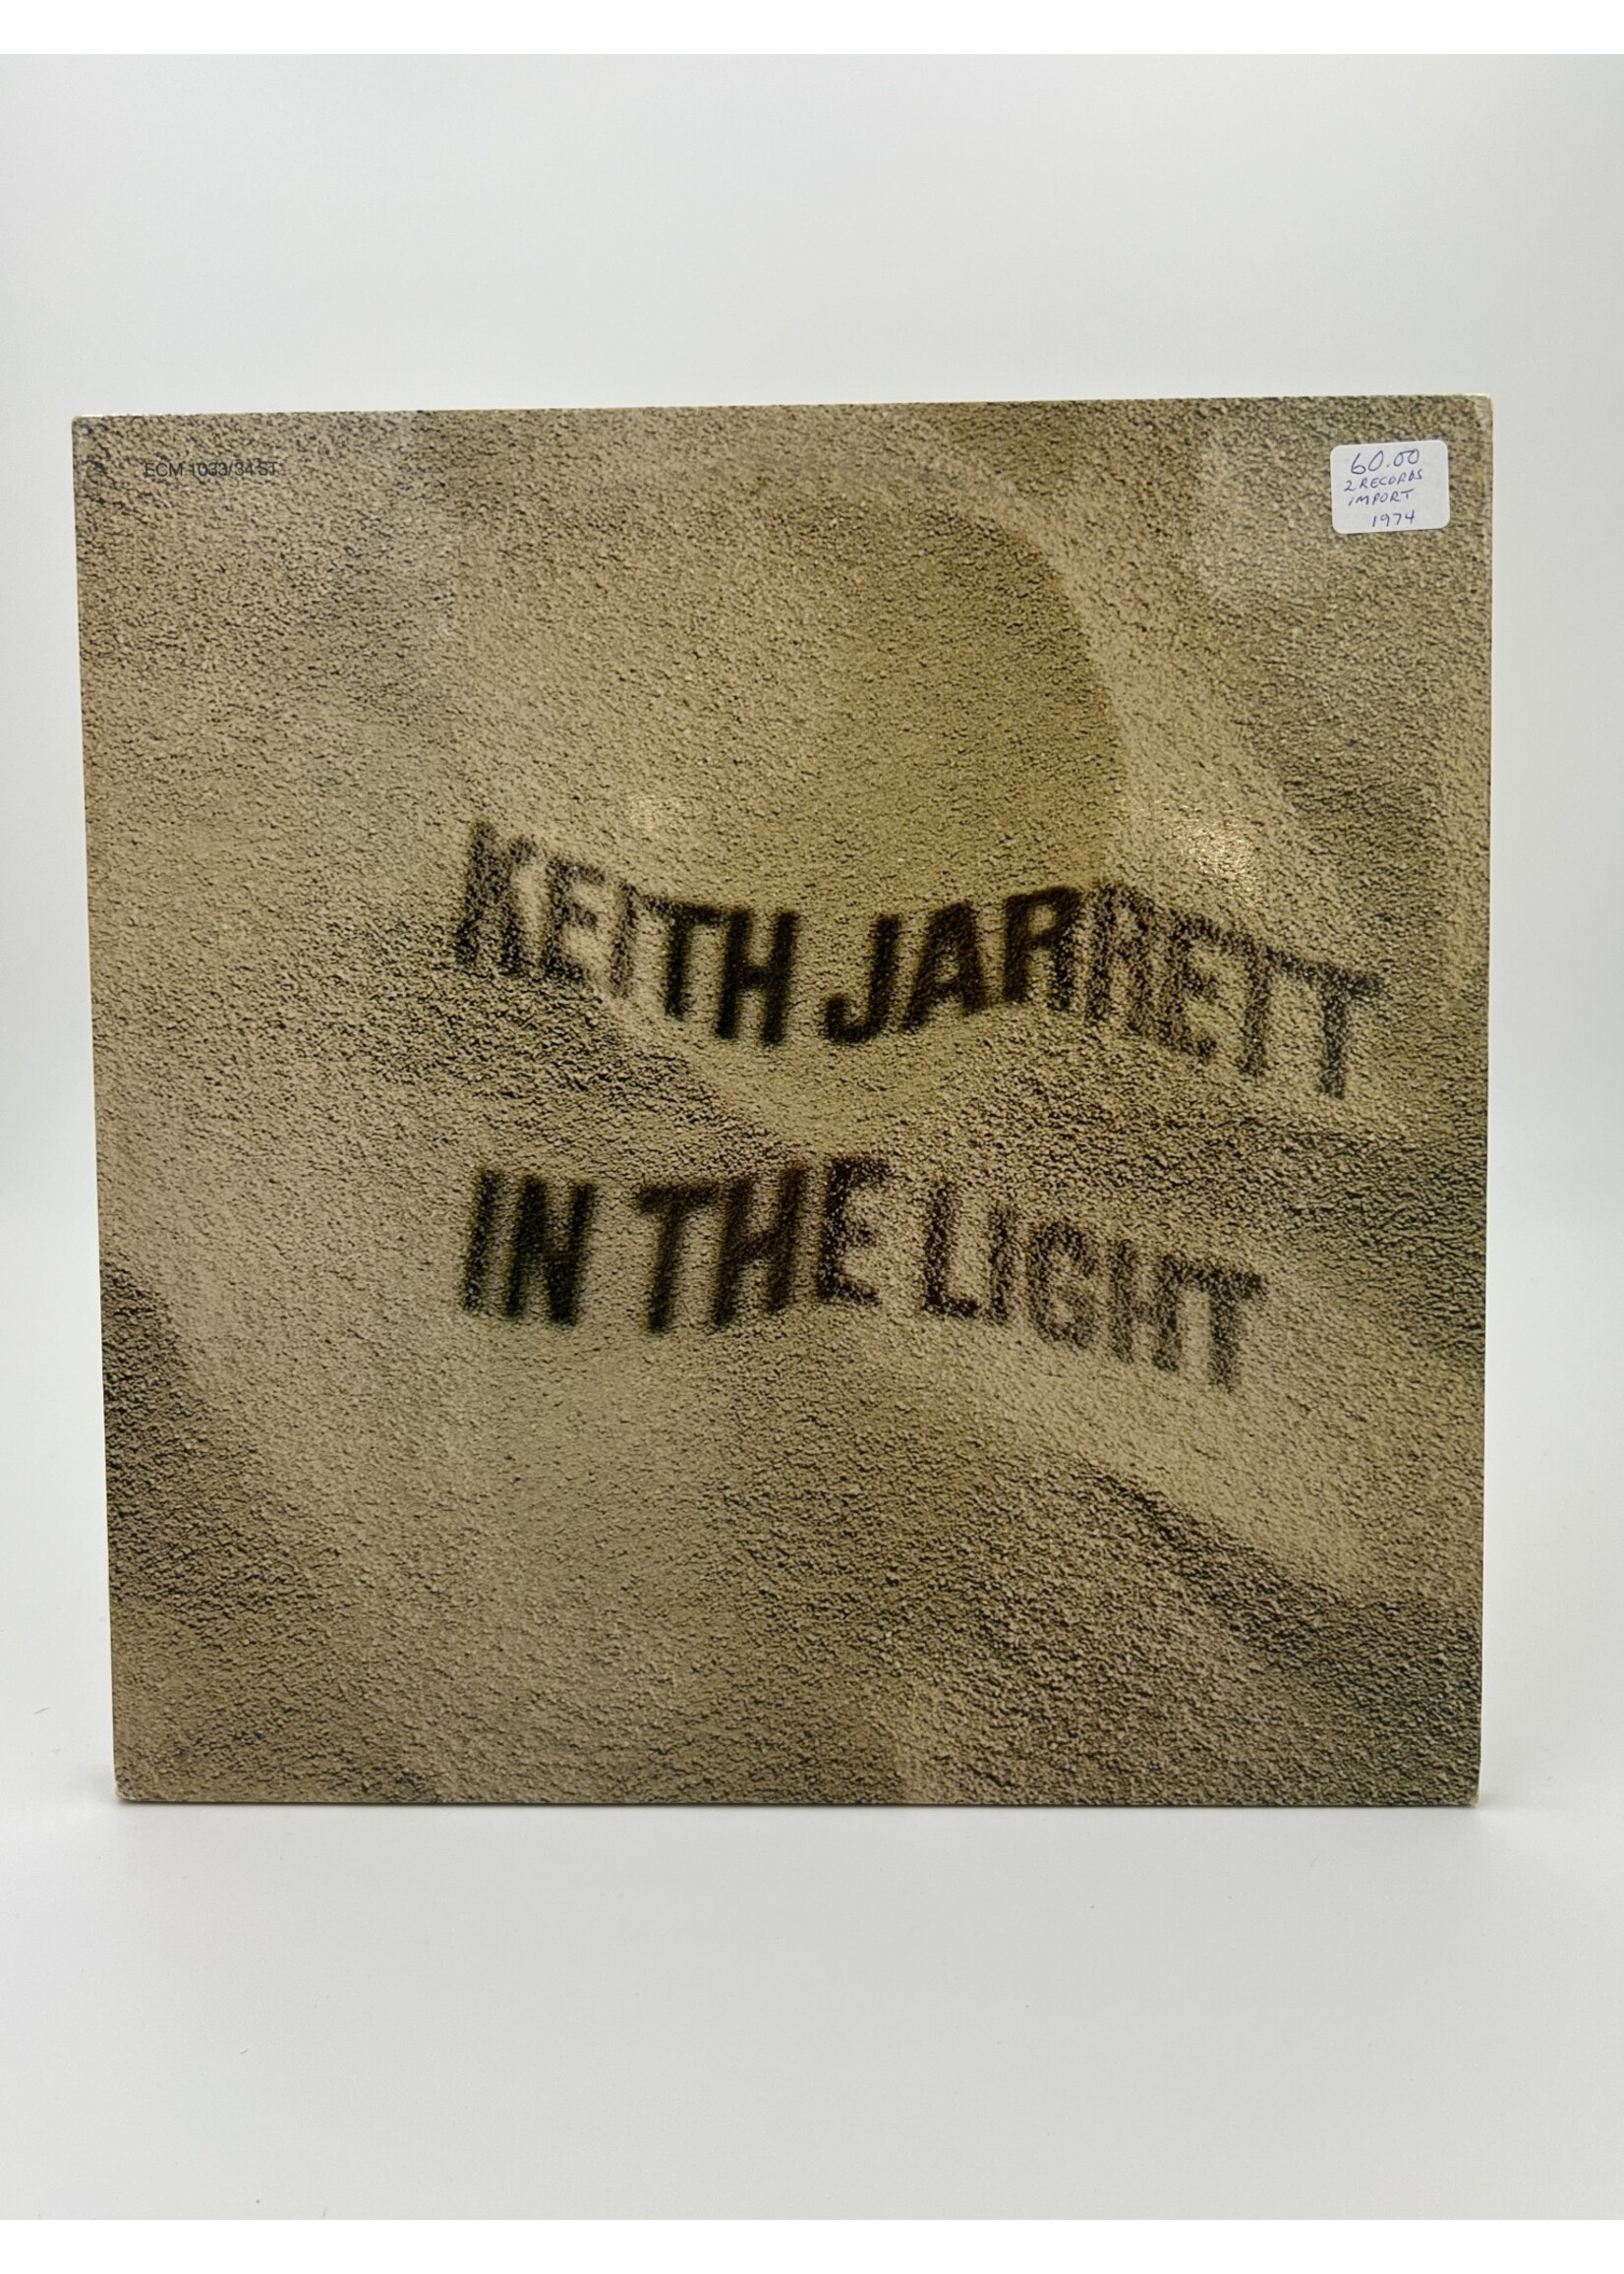 LP   Keith Jarrett In The Light LP Record